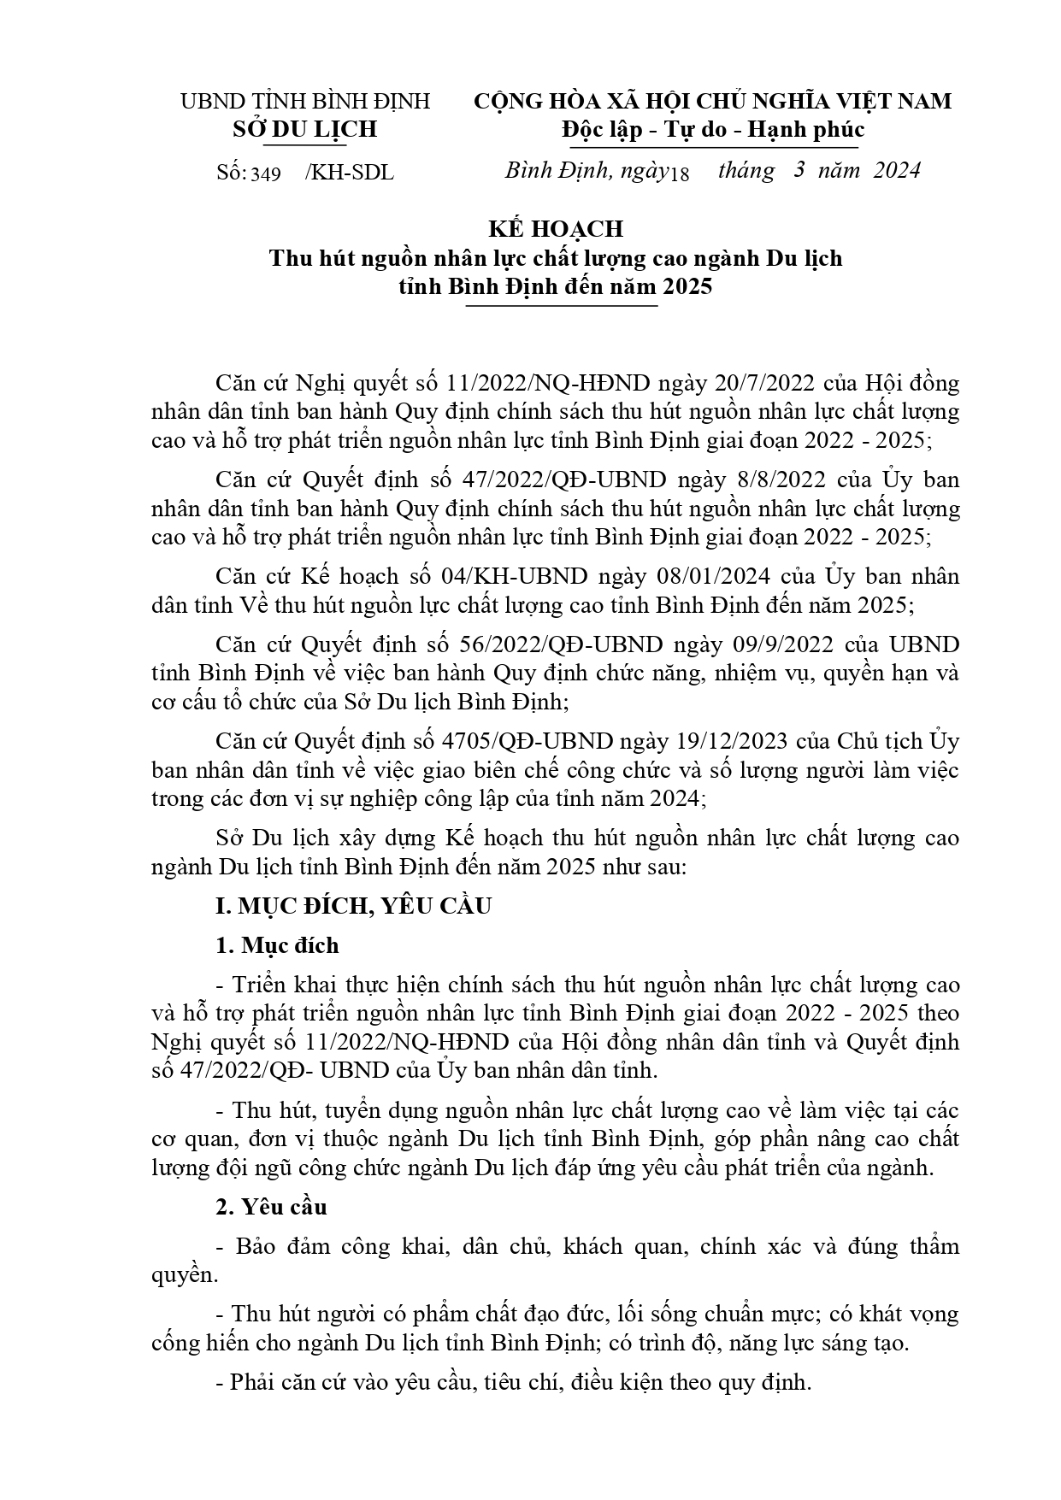 KH thu hut NNL chat luong cao 3 2024 (1) page 0001